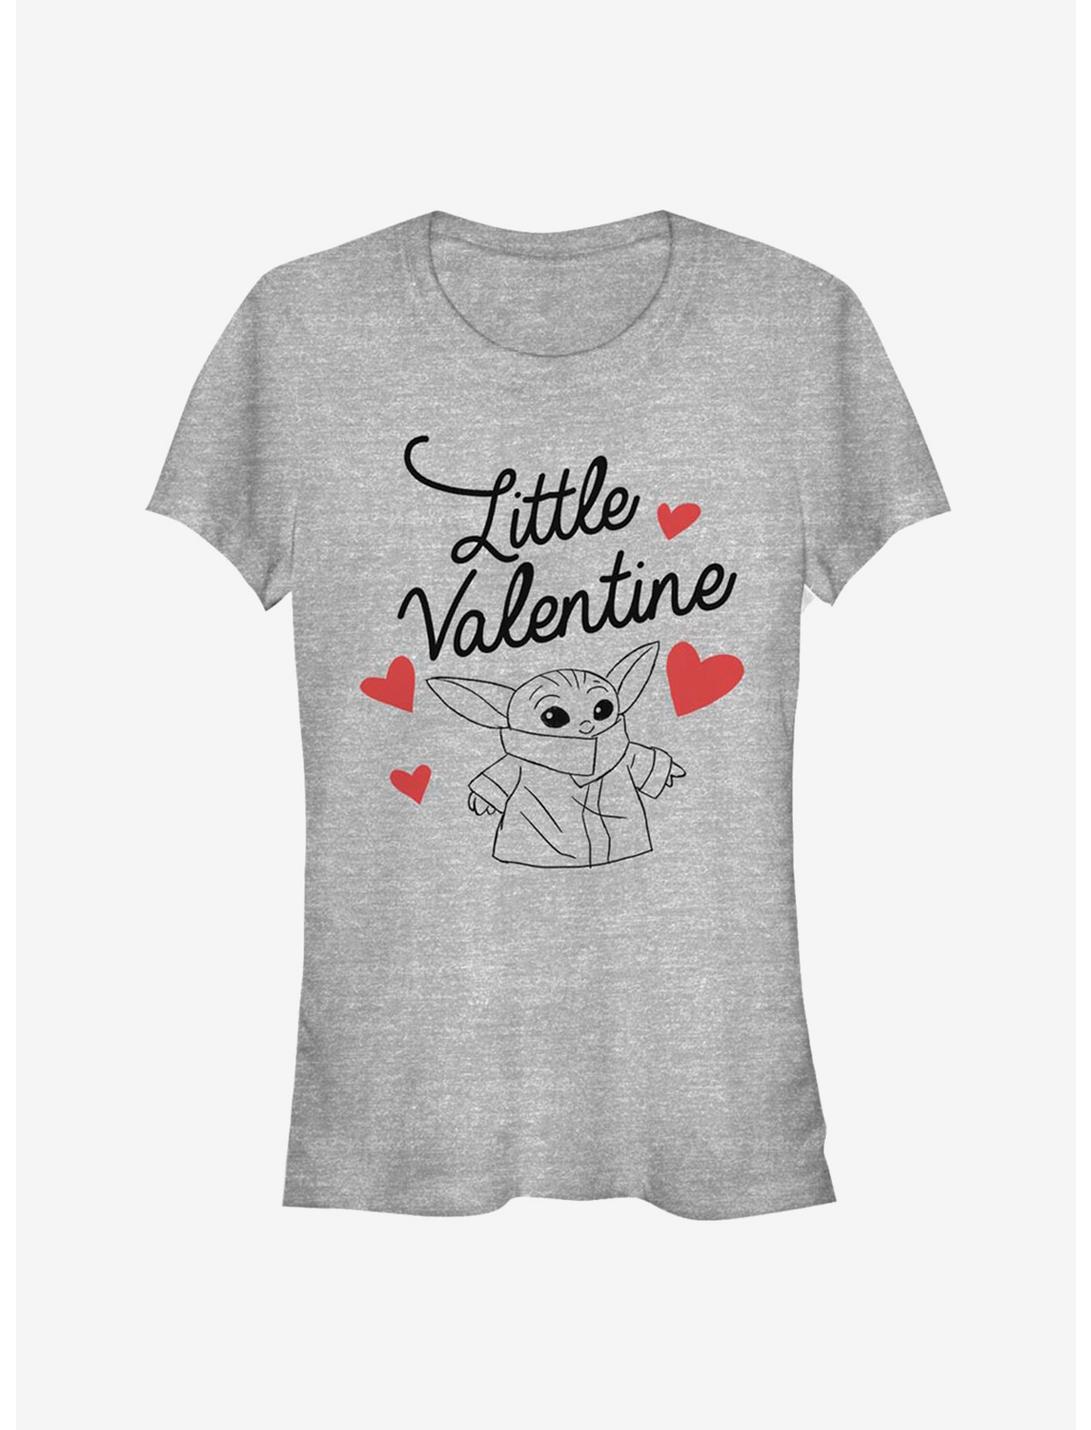 Star Wars The Mandalorian The Child Little Valentine Girls T-Shirt, ATH HTR, hi-res